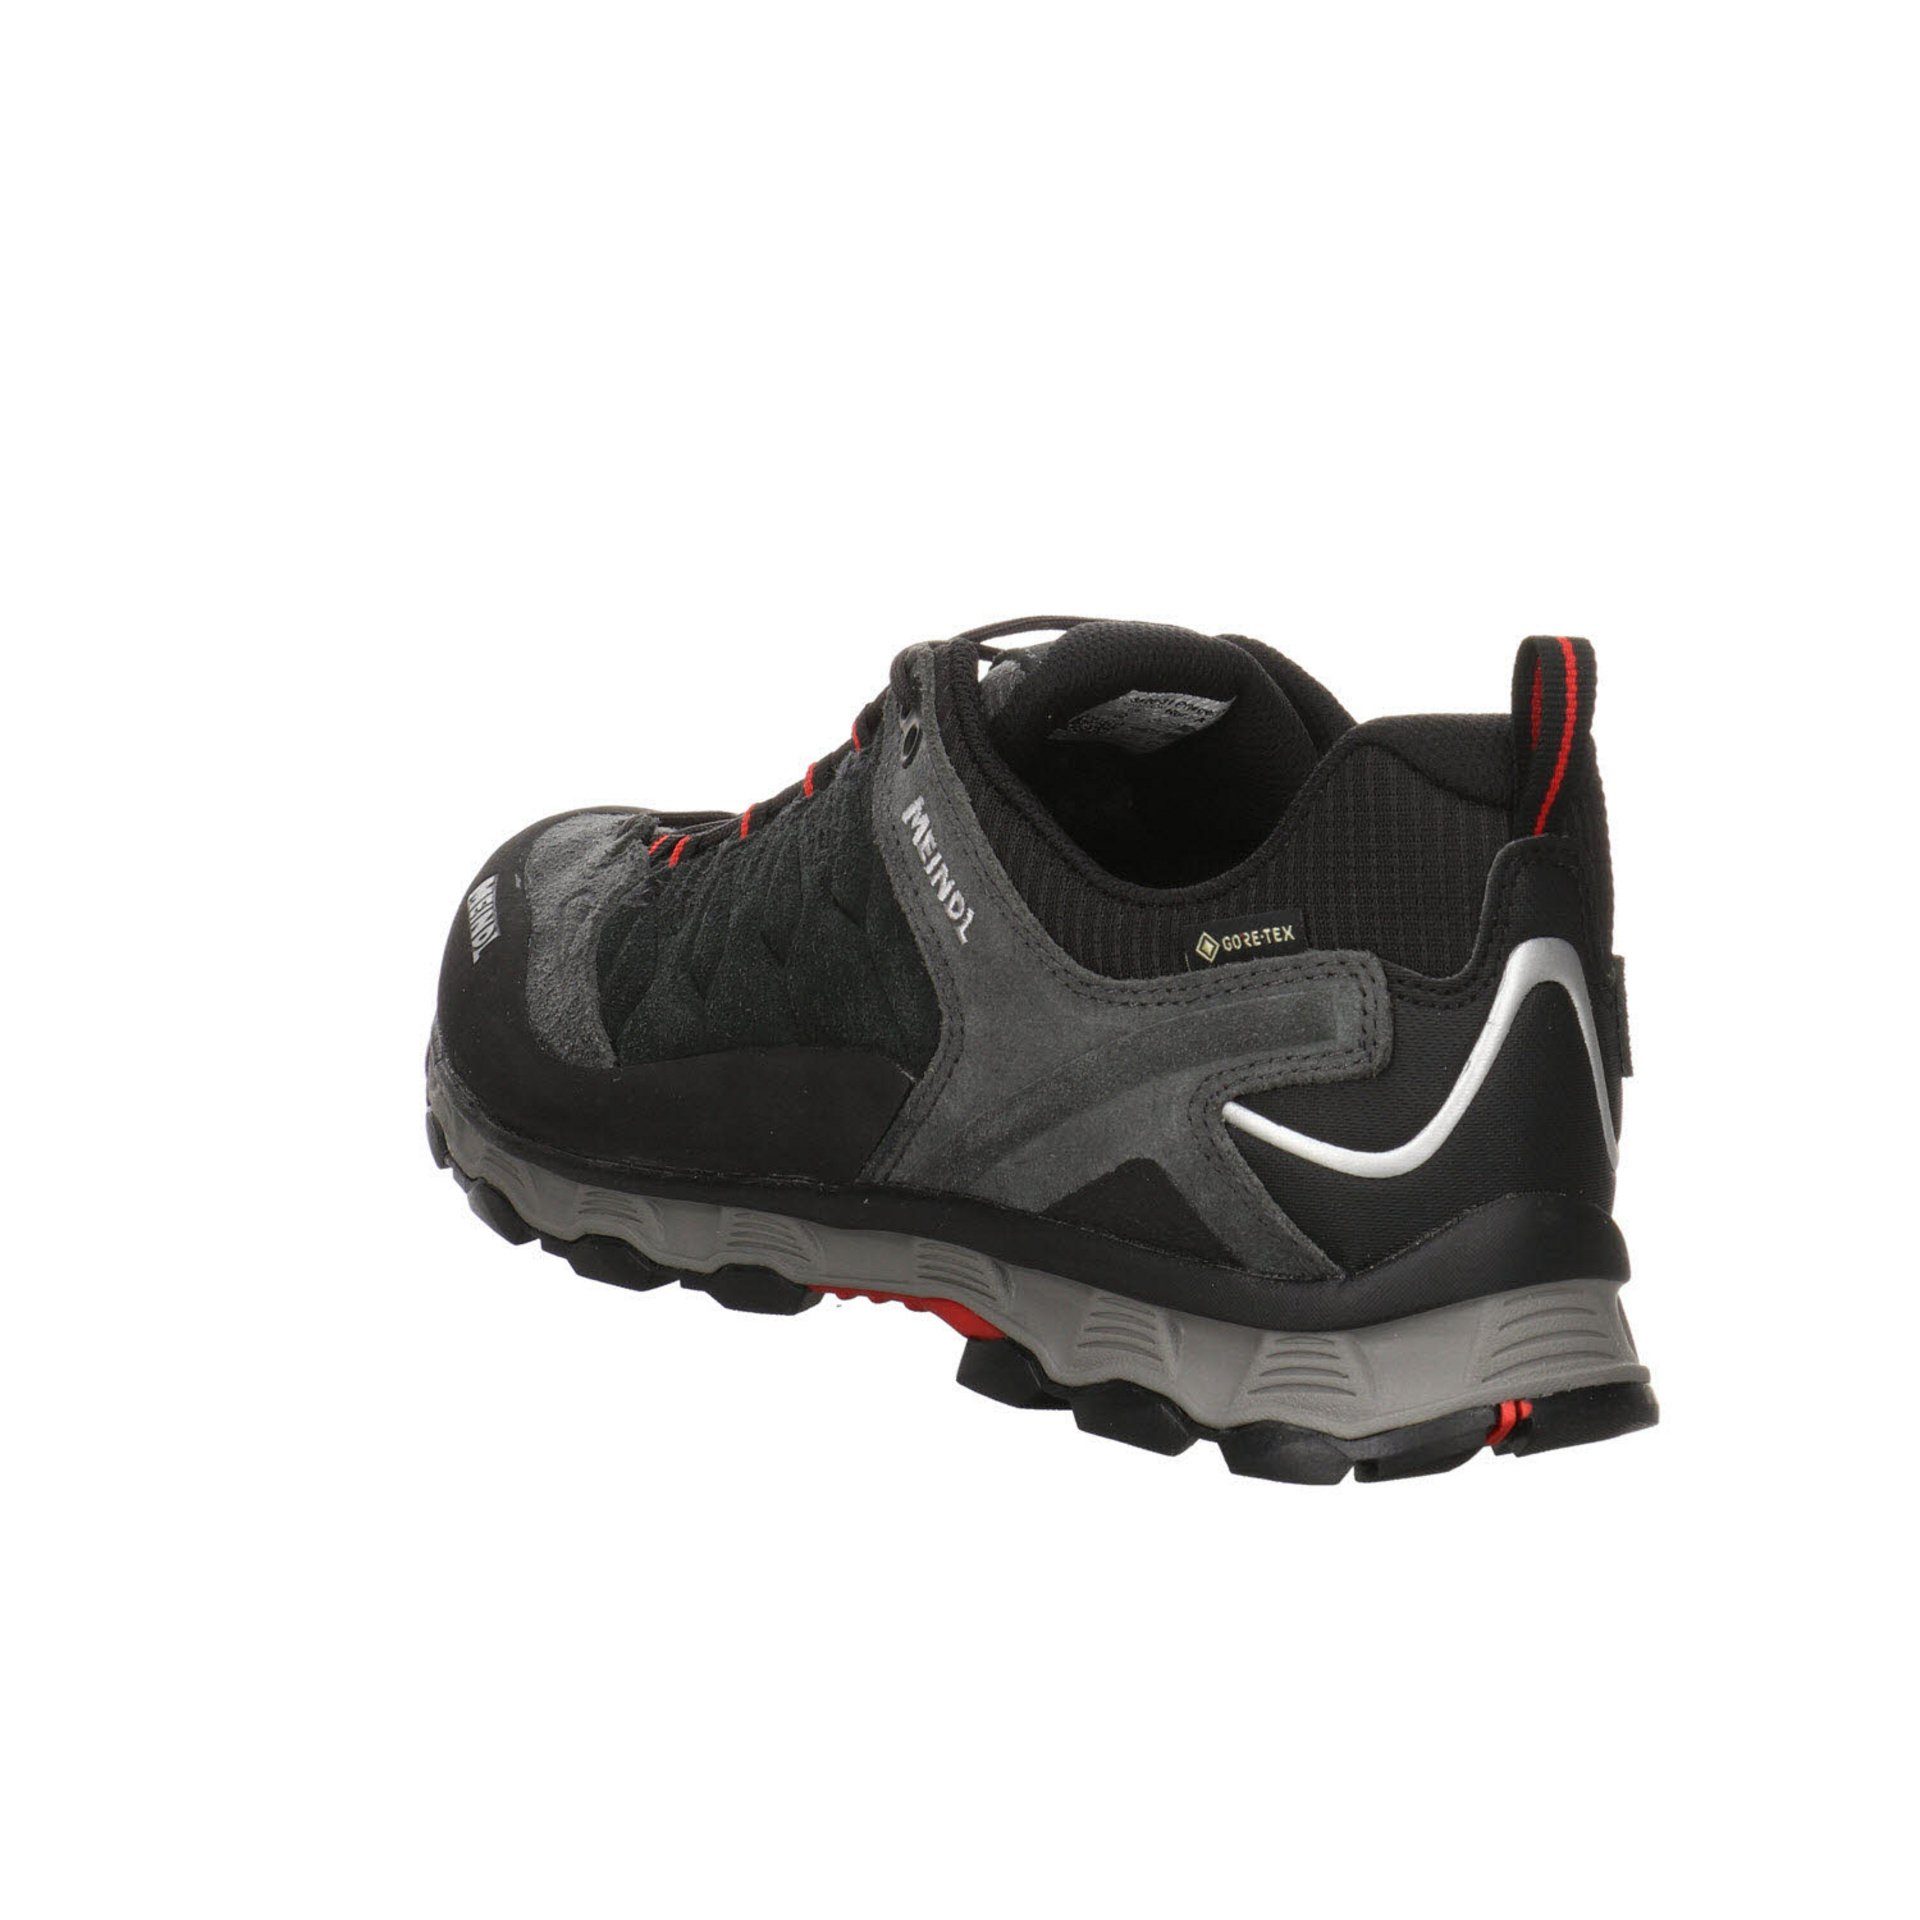 Schuhe Outdoorschuh Leder-/Textilkombination Herren Lite Trail kombiniert GTX schwarz Outdoorschuh m Outdoor Meindl